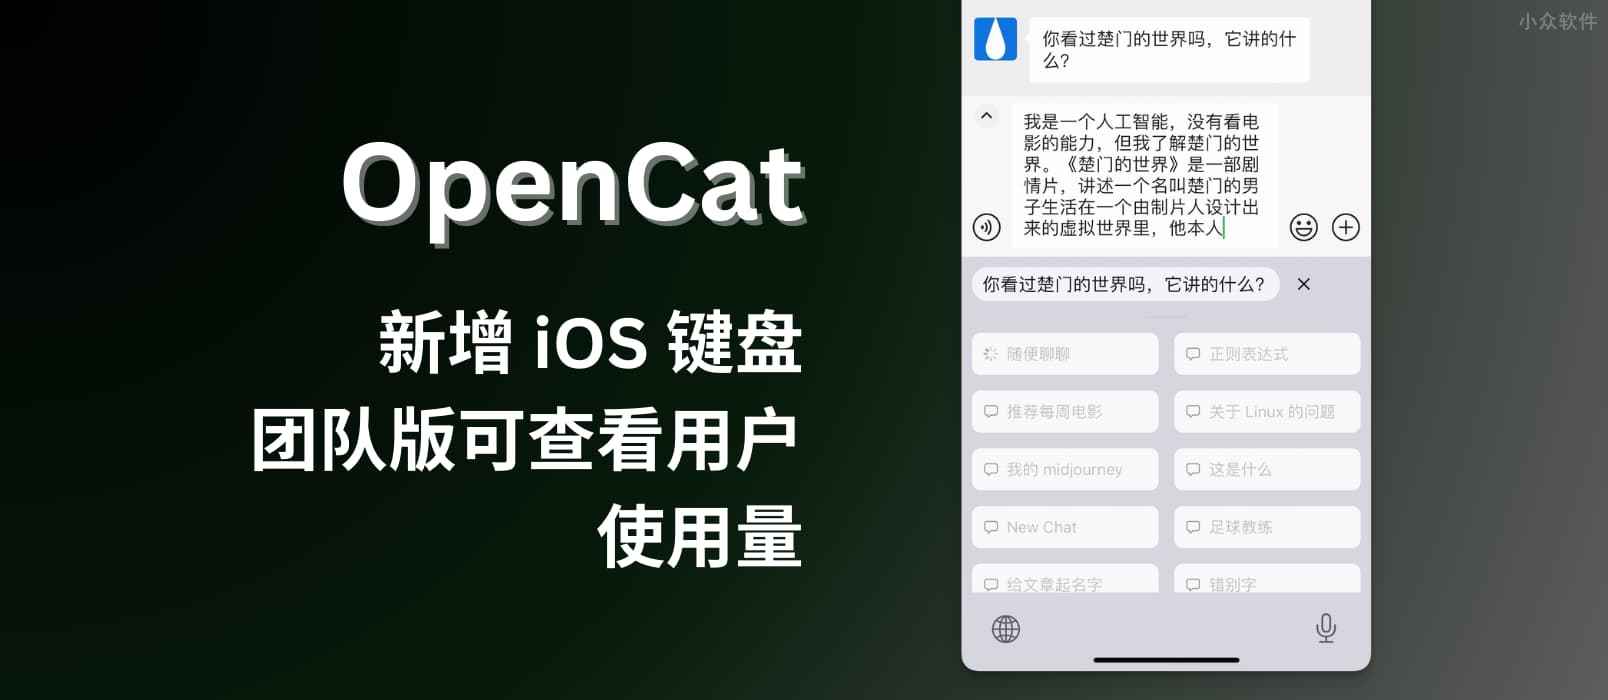 OpenCat 新增 iOS 键盘，超便捷向 ChatGPT 提问，并自动输入回答。另团队版可查看用户使用量